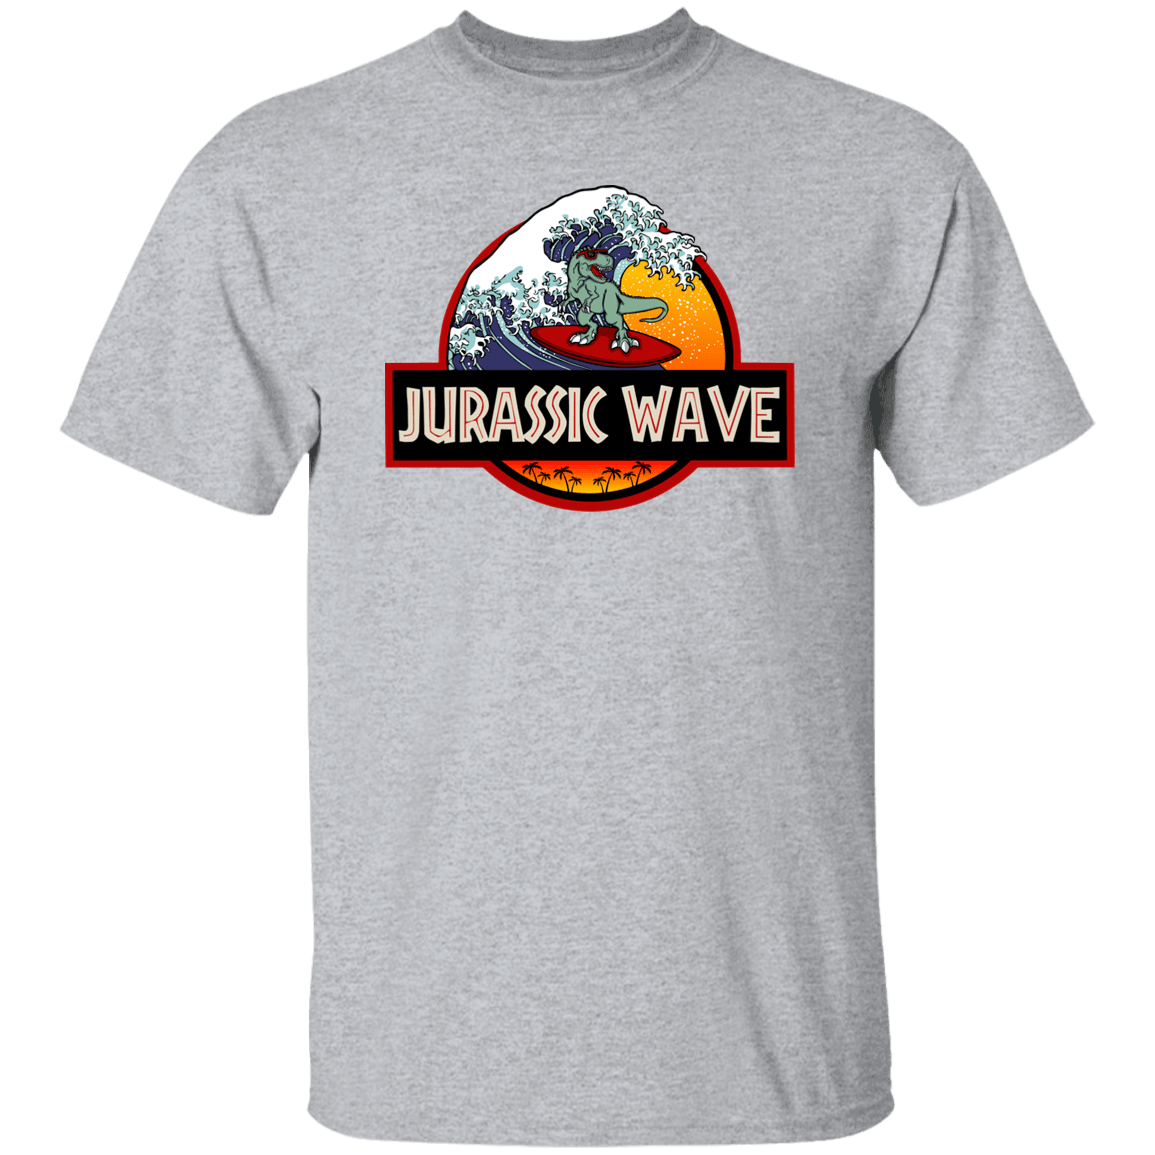 T-Shirts Sport Grey / S Jurassic Wave T-Shirt